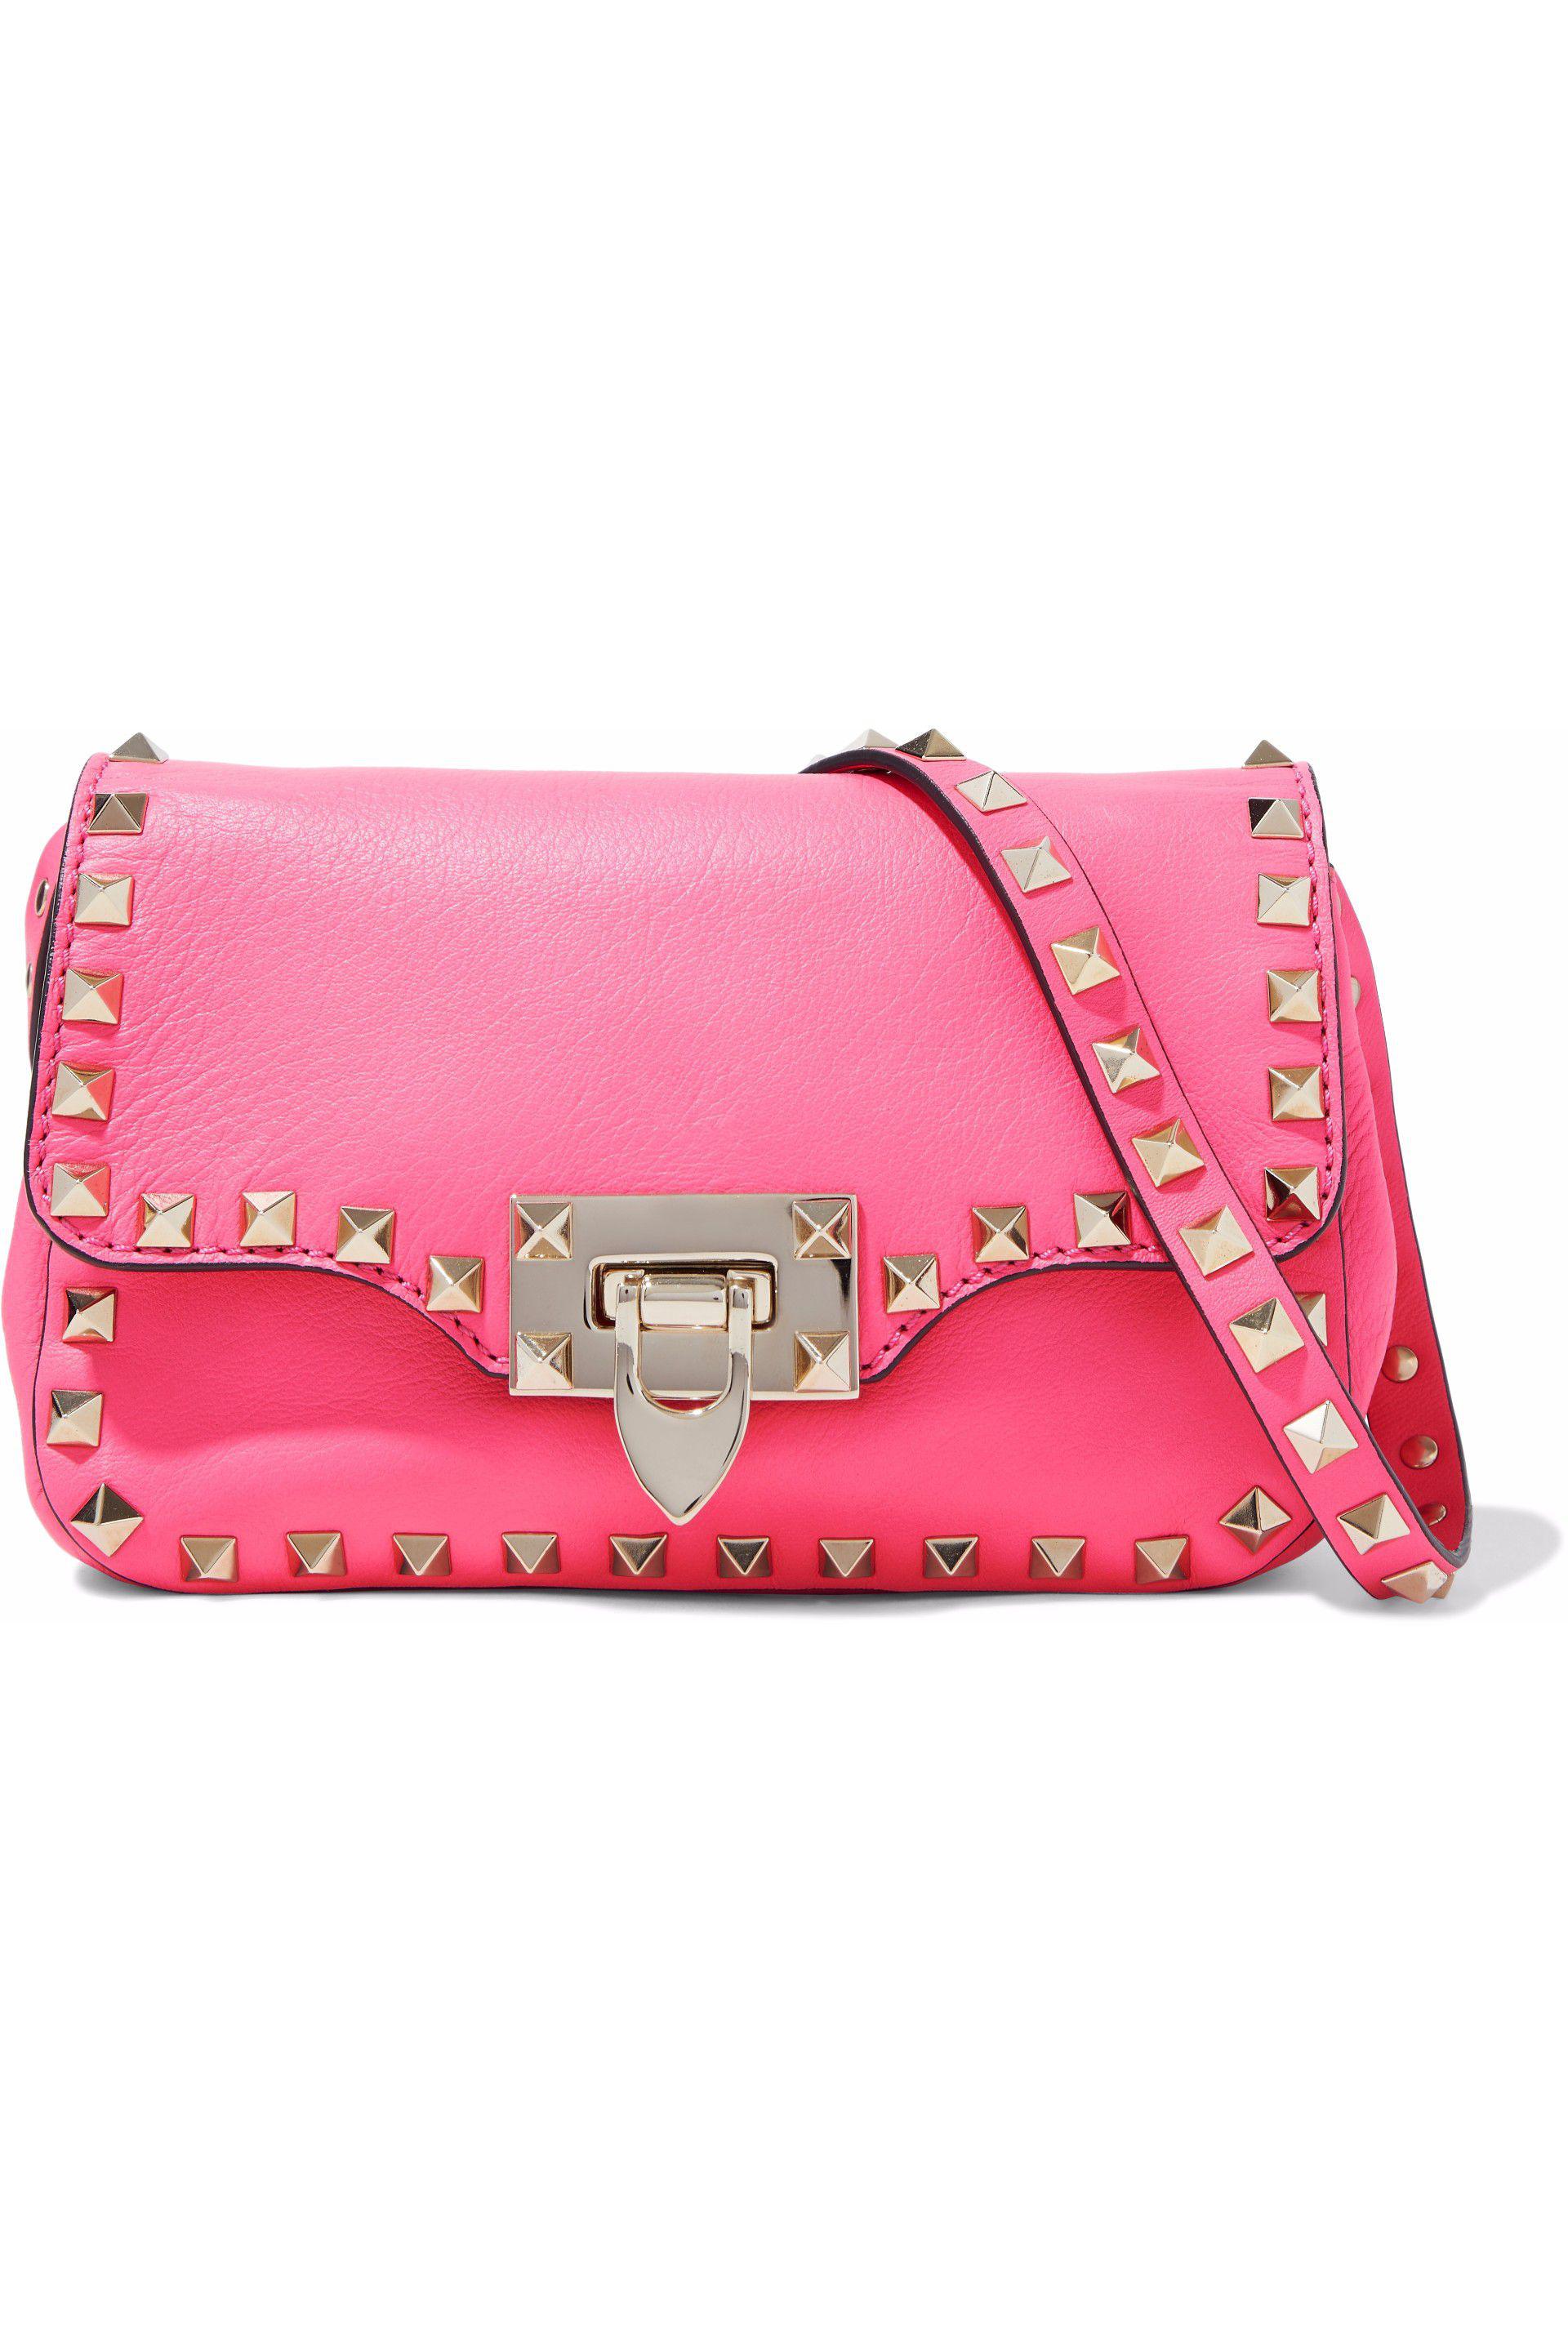 Valentino Rockstud Neon Leather Shoulder Bag Bright Pink - Lyst